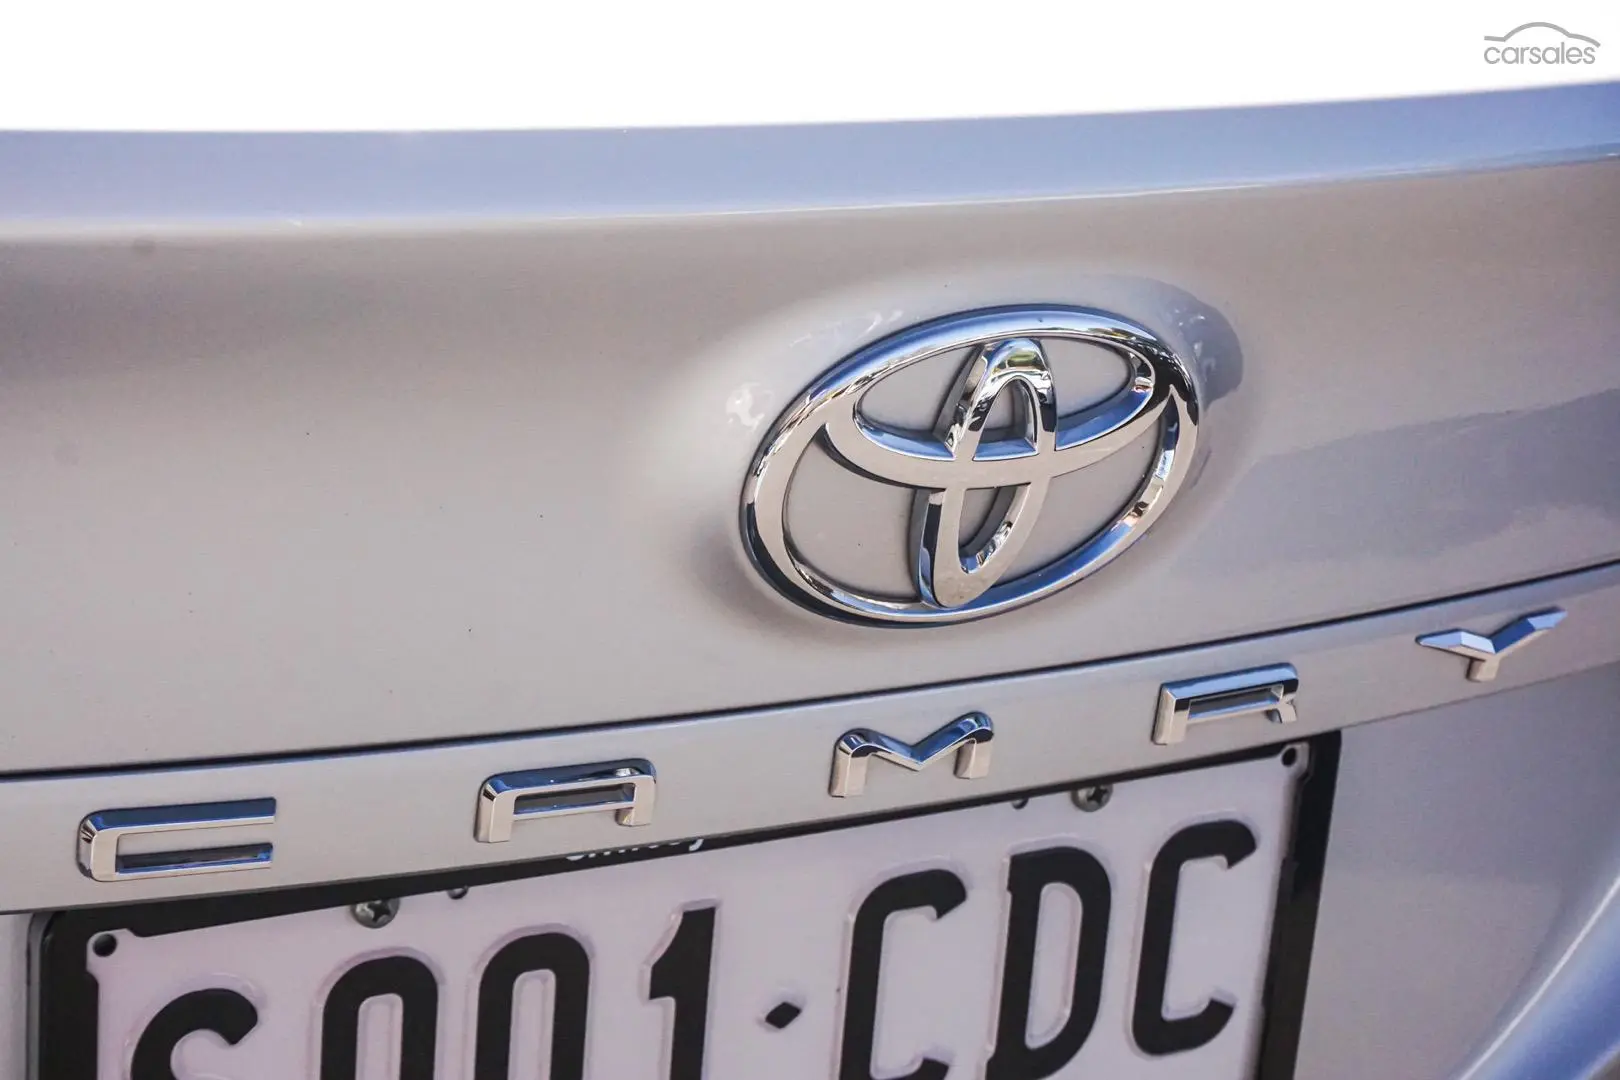 2019 Toyota Camry Image 15